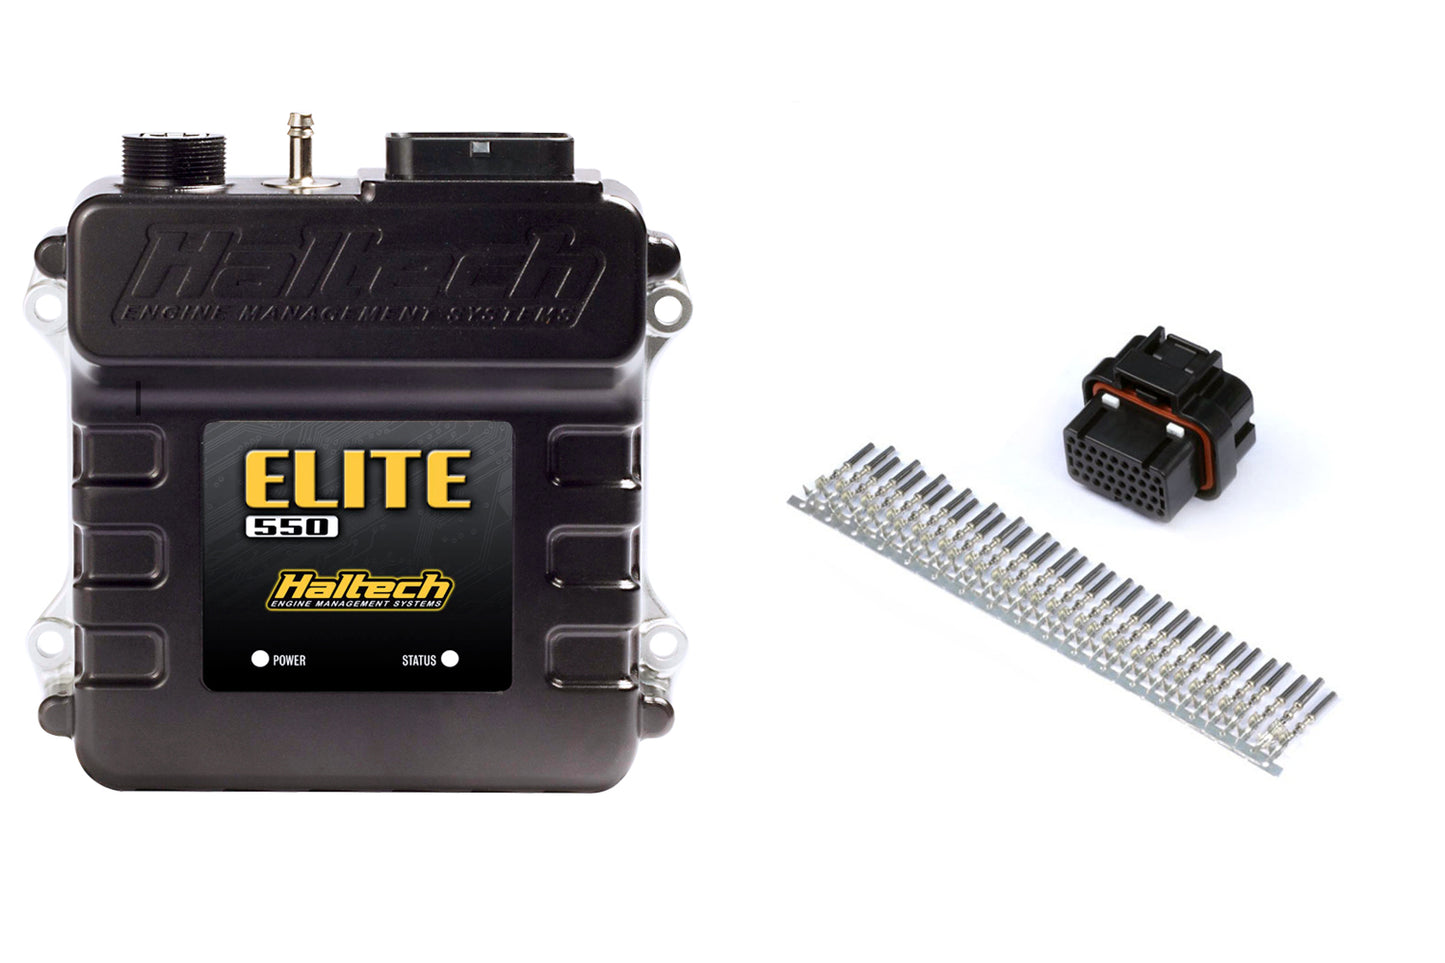 Haltech Elite 550 - Engine Management System